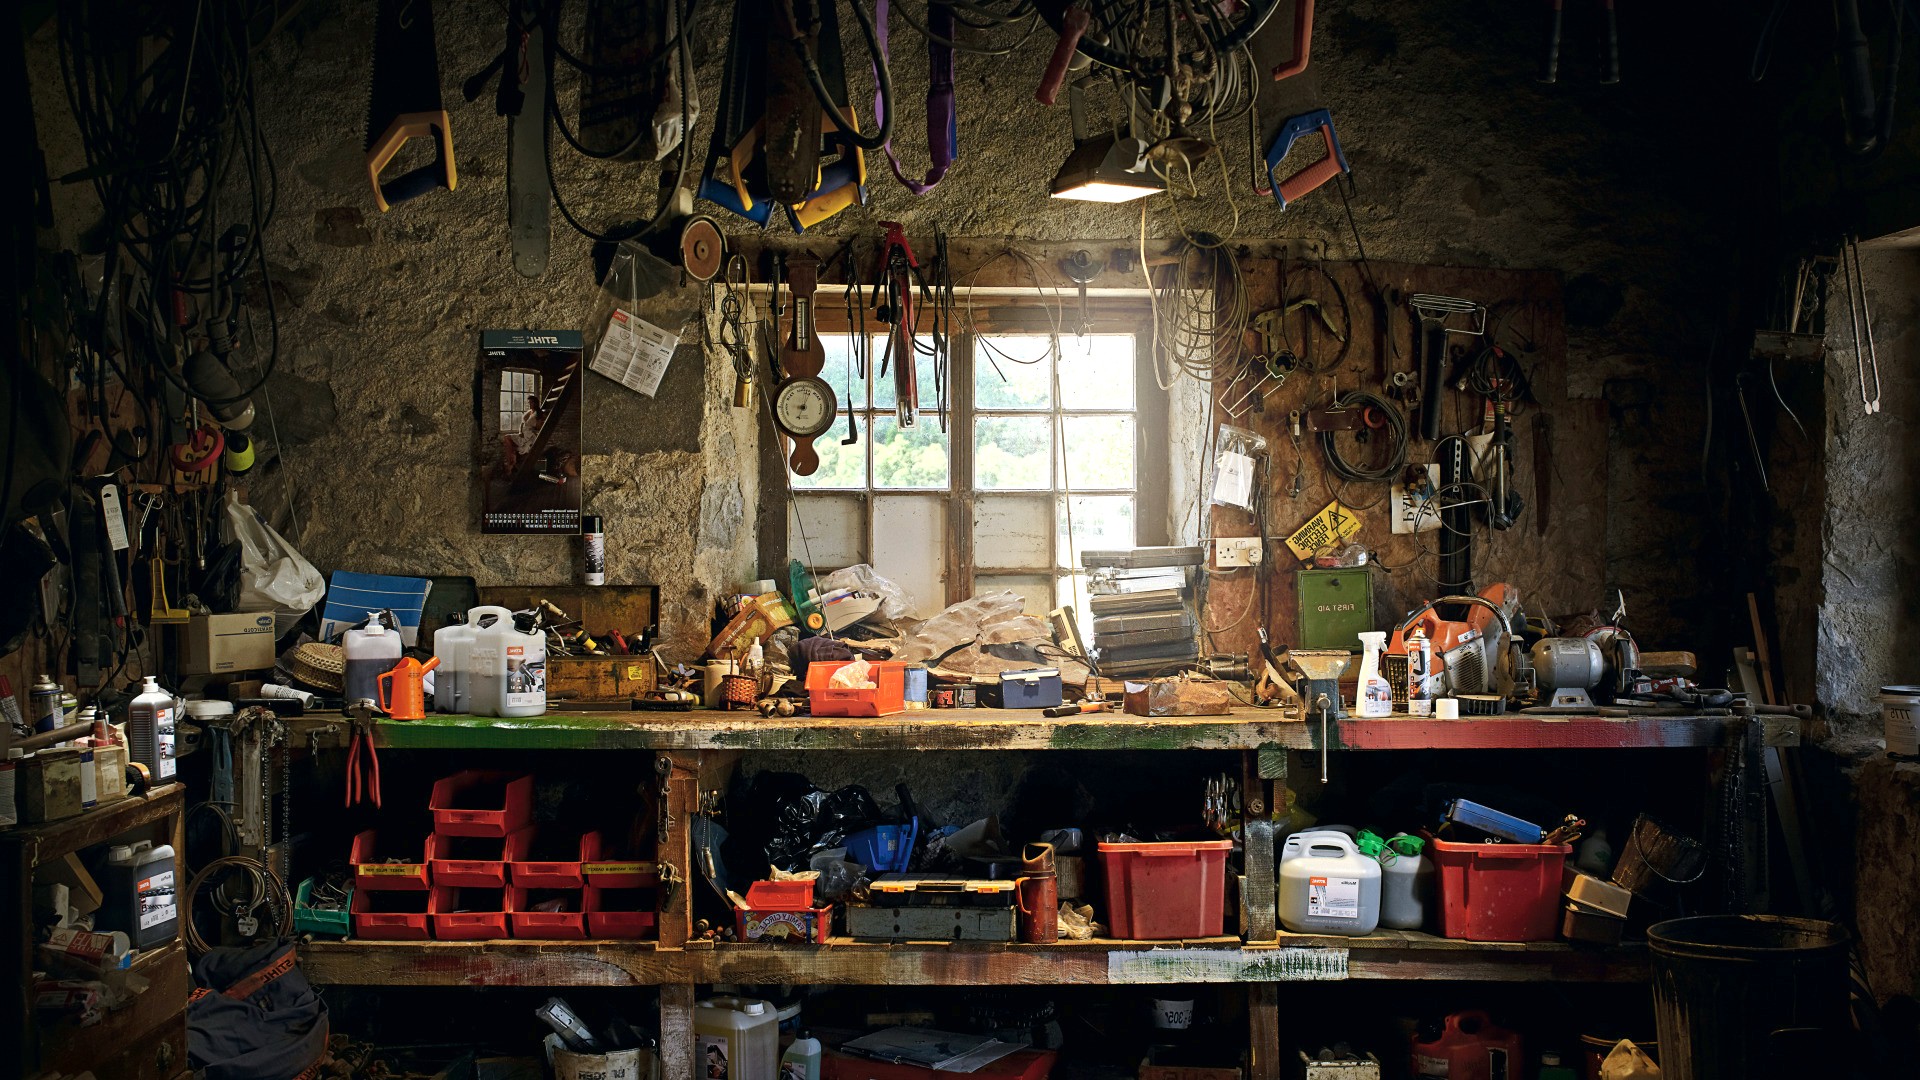 picture: ferramentas, janela, oficina (image)